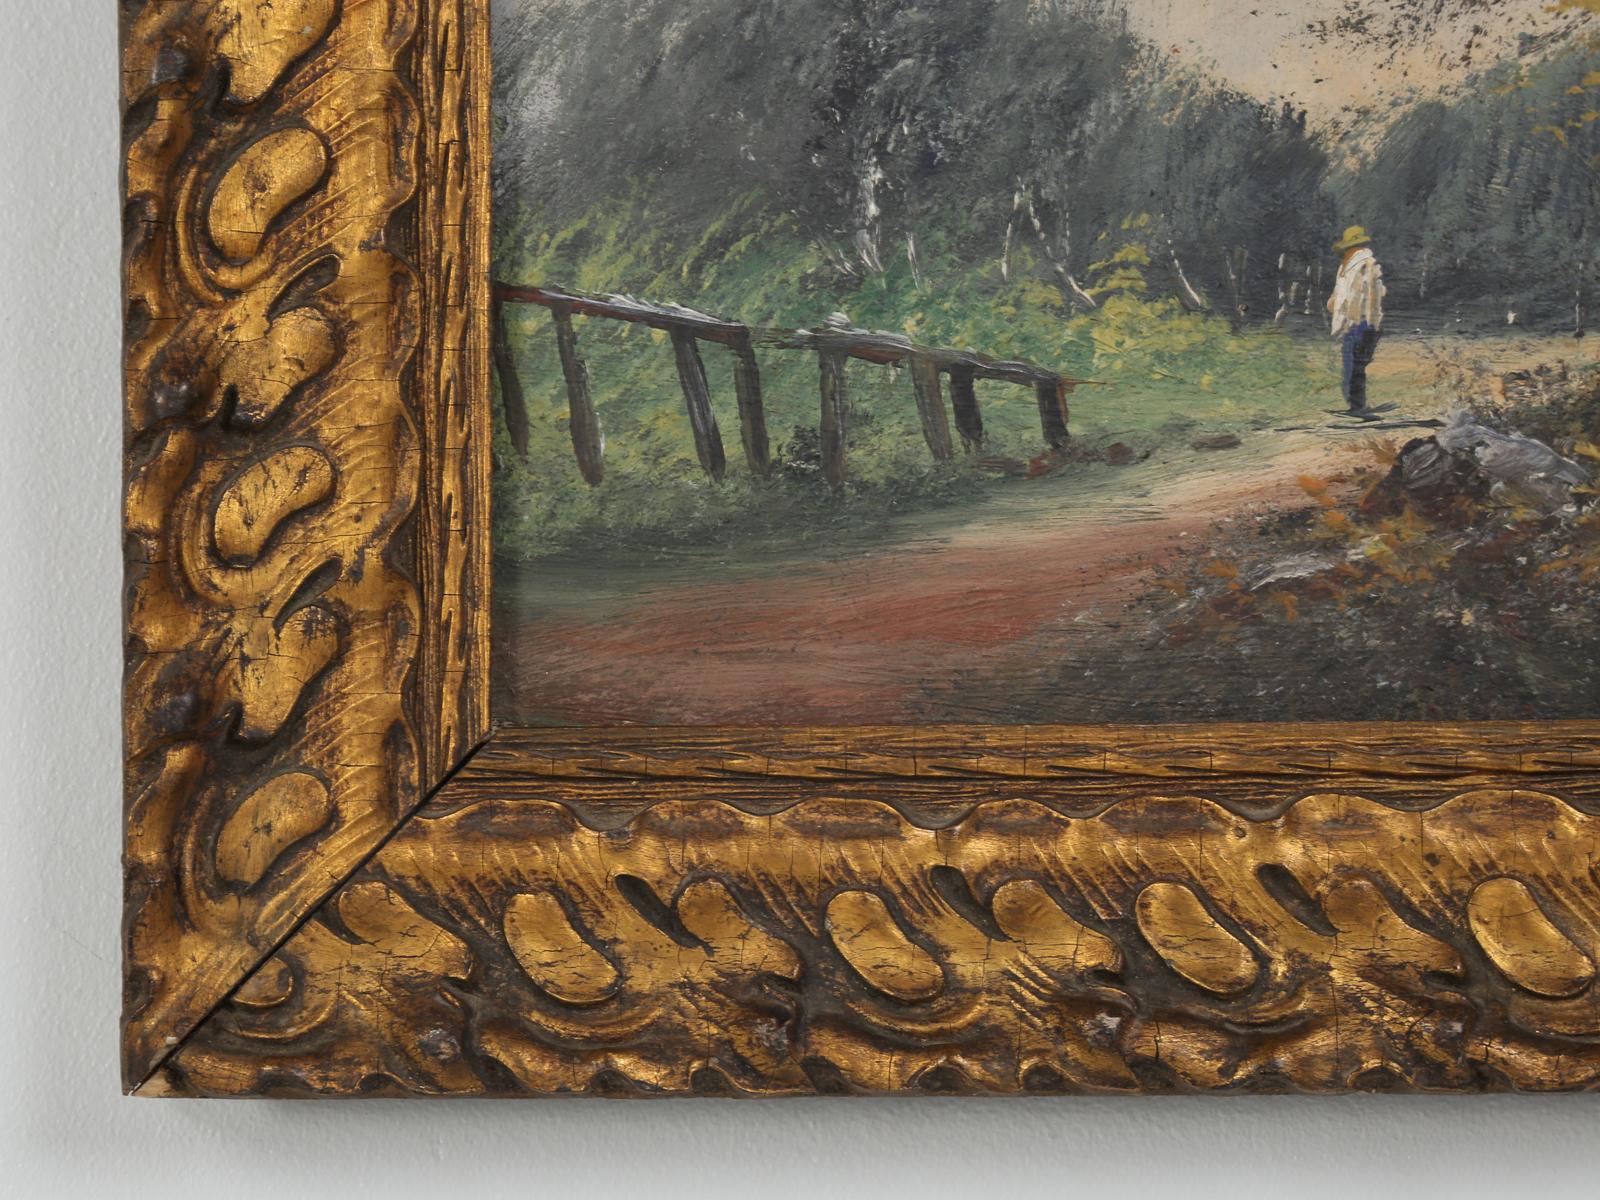 Antique French Landscape Oil Painting on Linen Signed Baldy, Original Gilt Frame For Sale 1